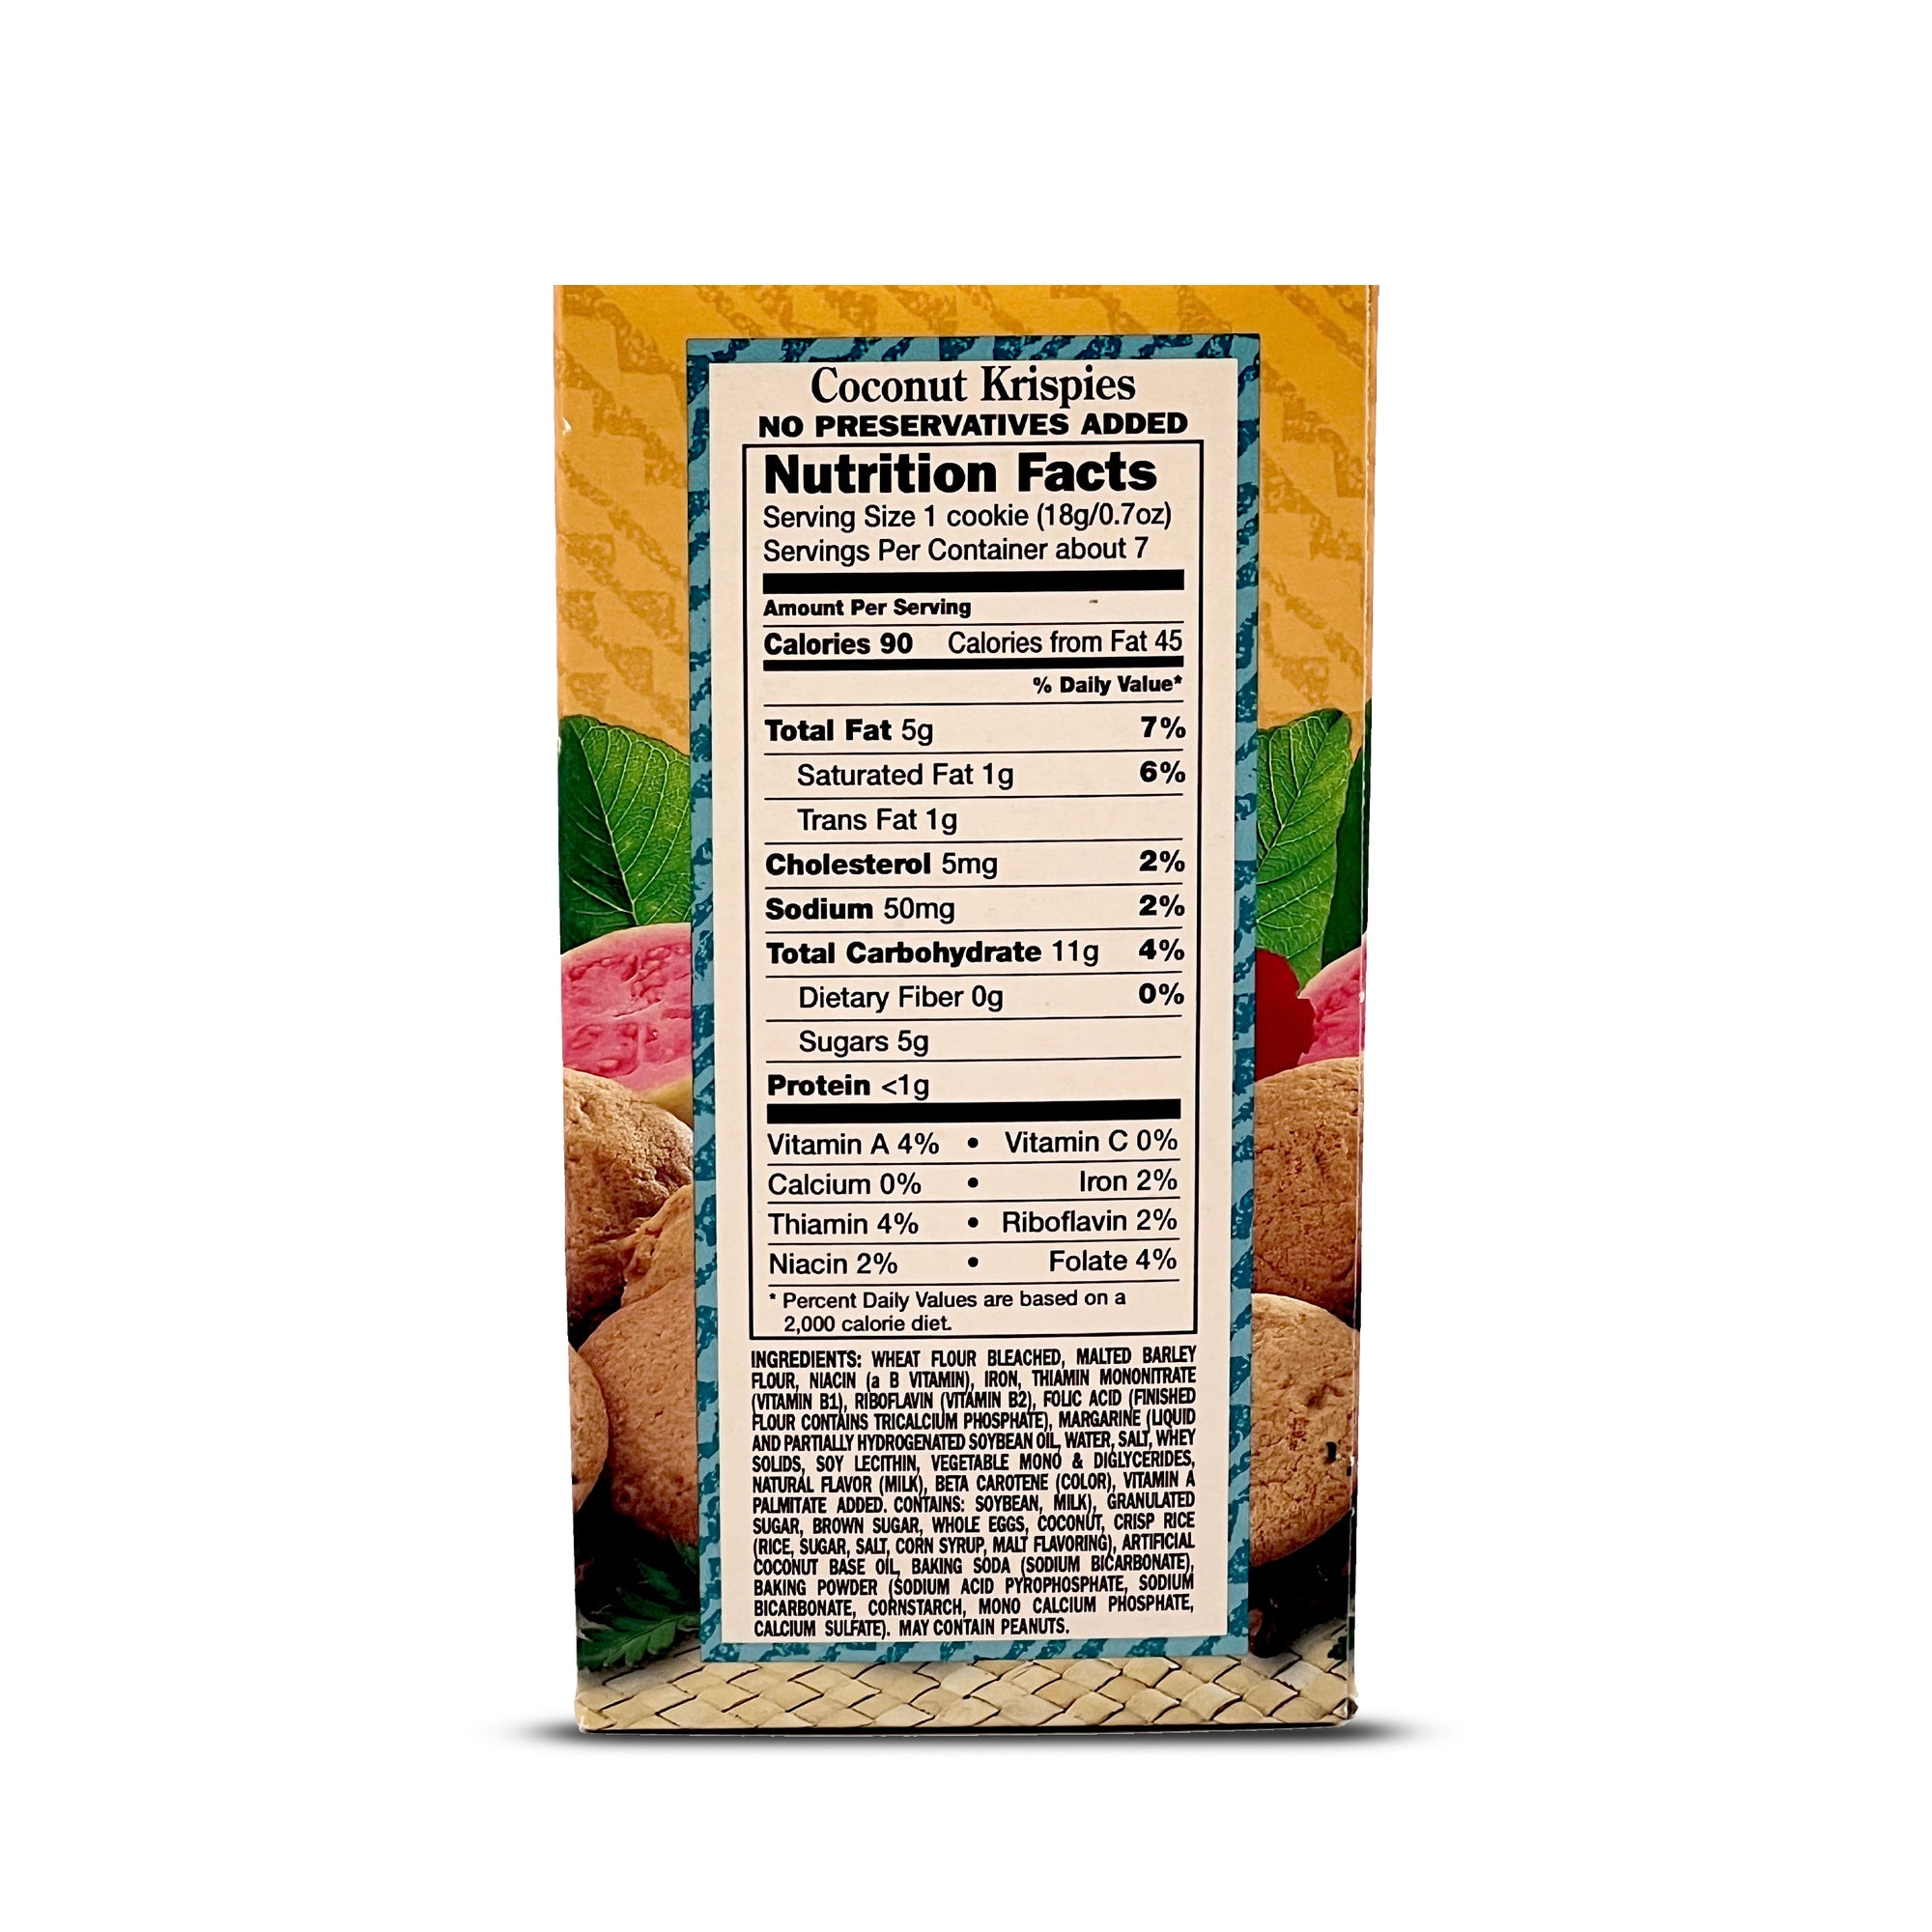 Pop-Up Mākeke - Kauai Kookies - Homestyle Hawaiian Cookies - Coconut Krispies - Nutritional Information